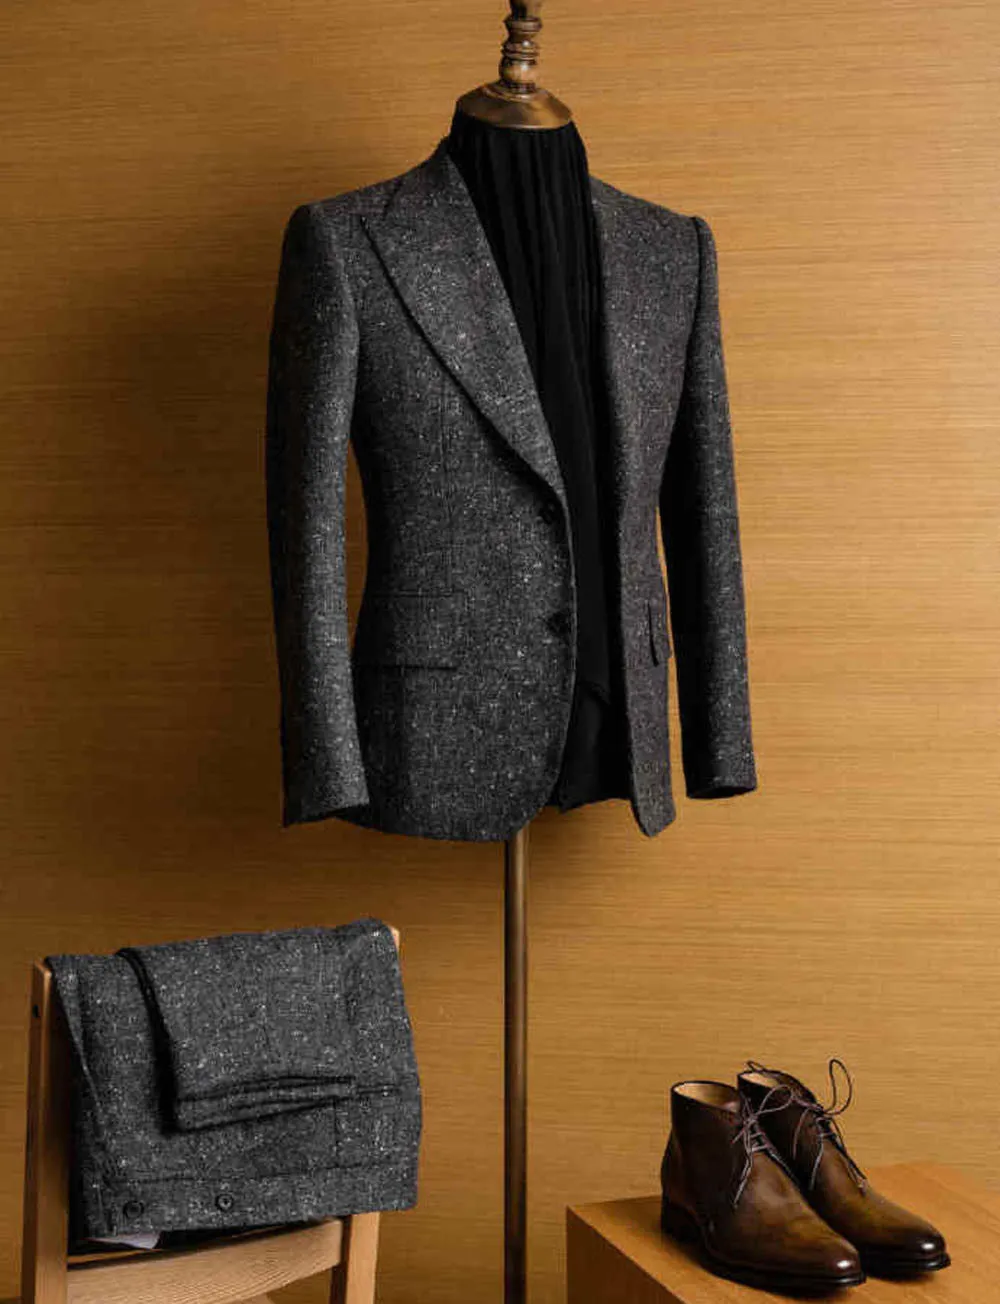 Sonbahar Kış Yün Erkek Vintage Blend Koyu Gri Damat smokin Custom Made Mens Slim Fit Suits (Ceket + Pantolon) Takımlar